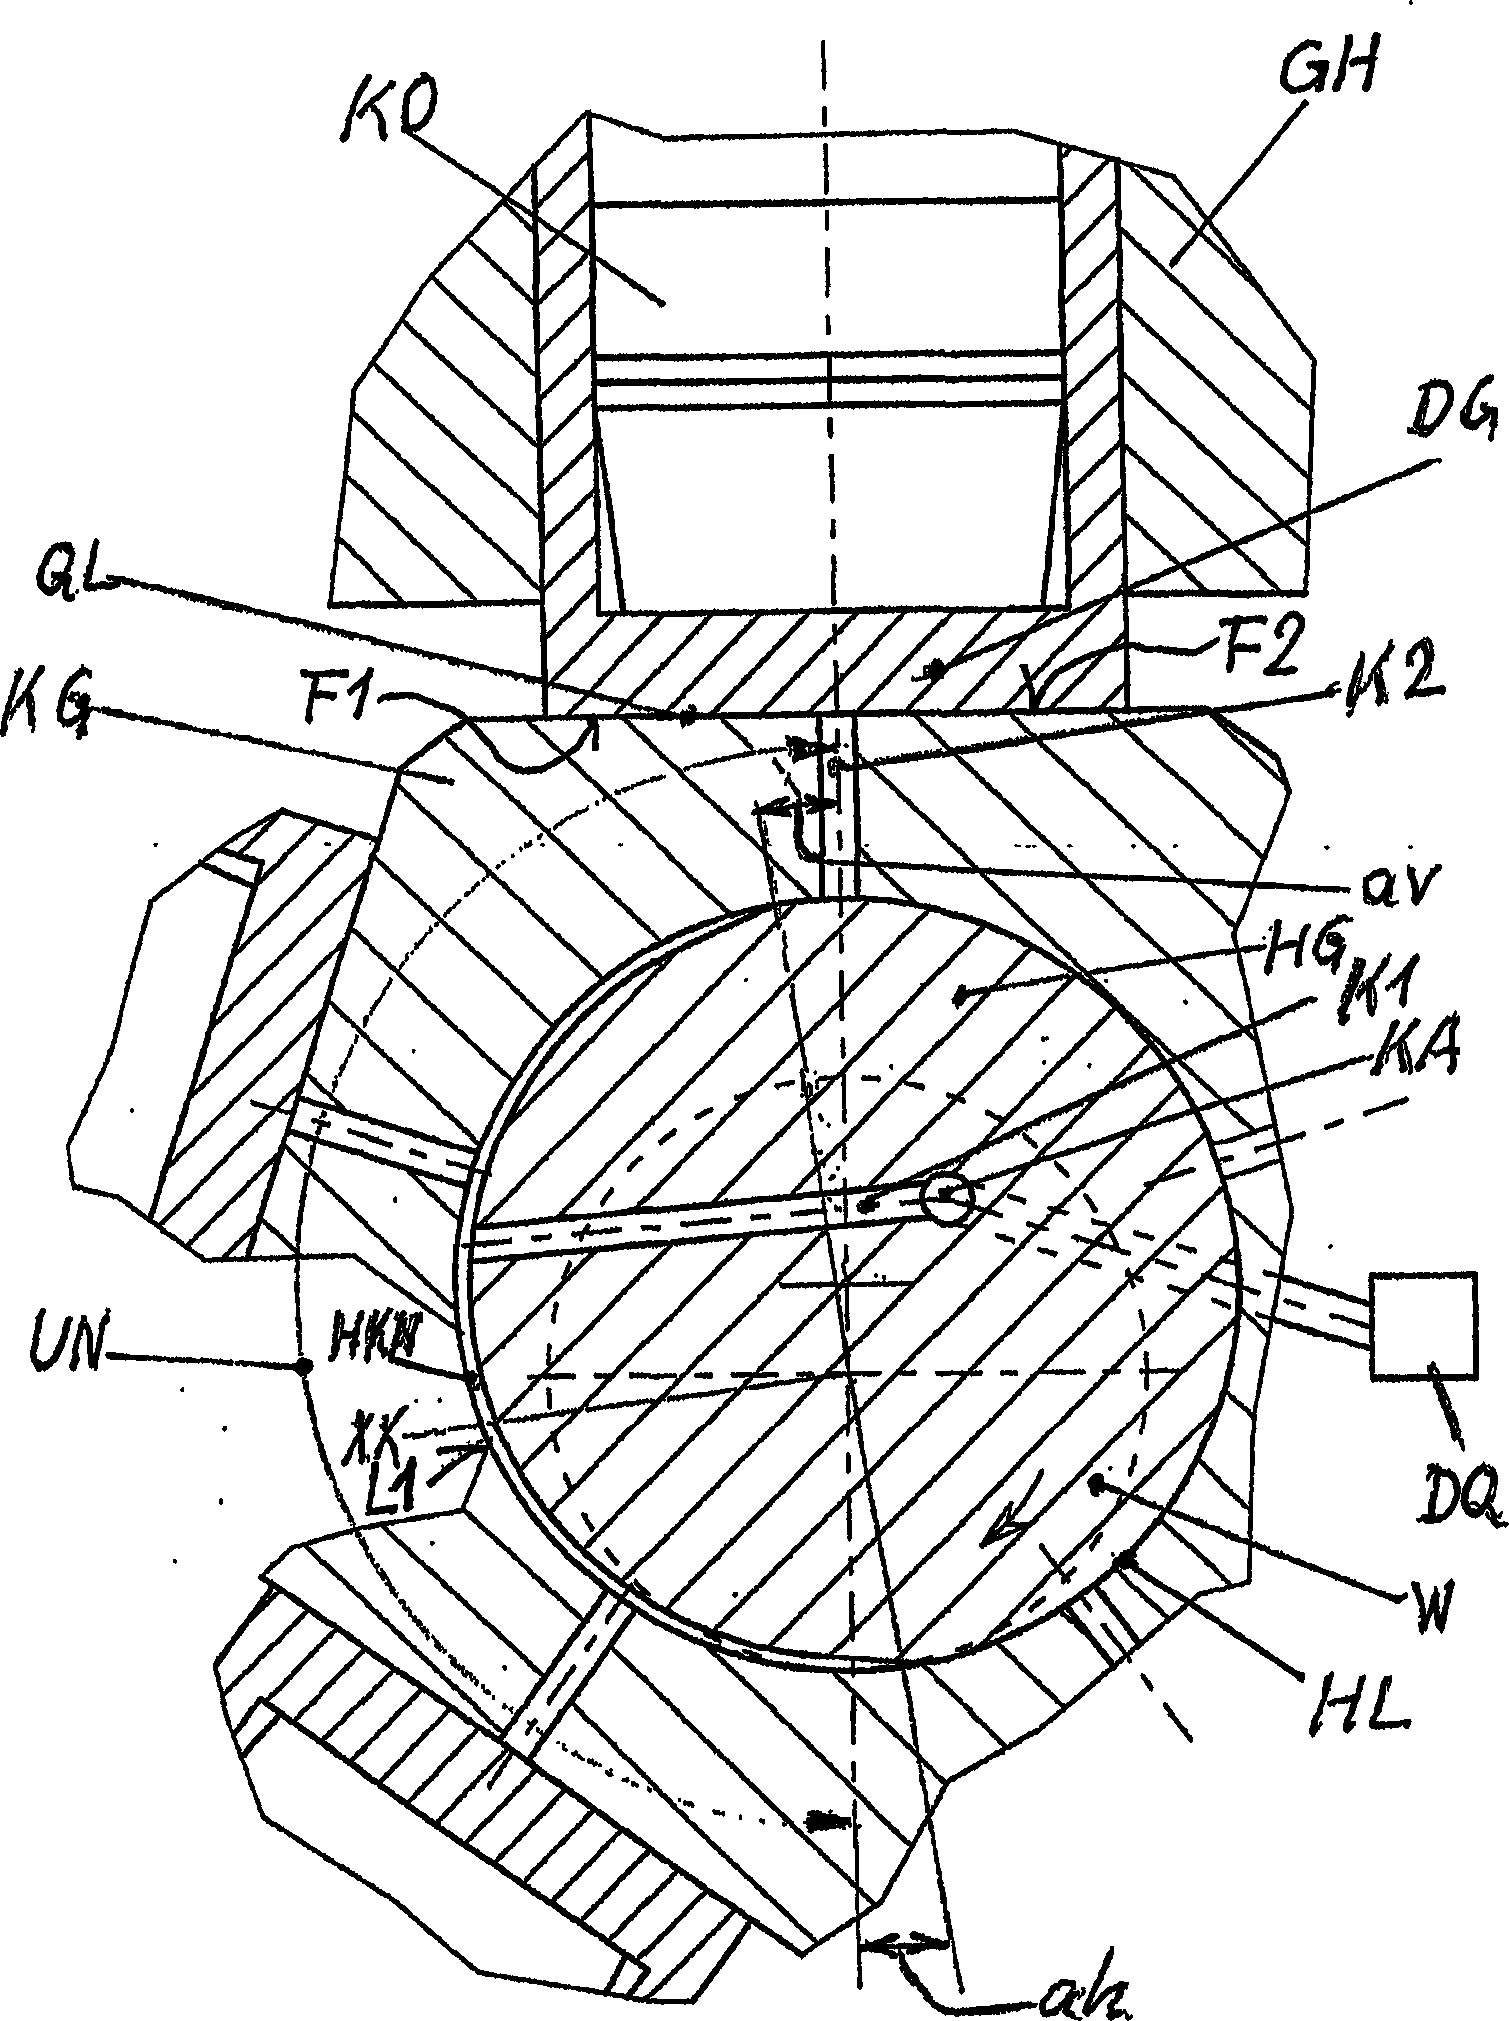 Eccentric drive mechanism for volumetric pumps or motors